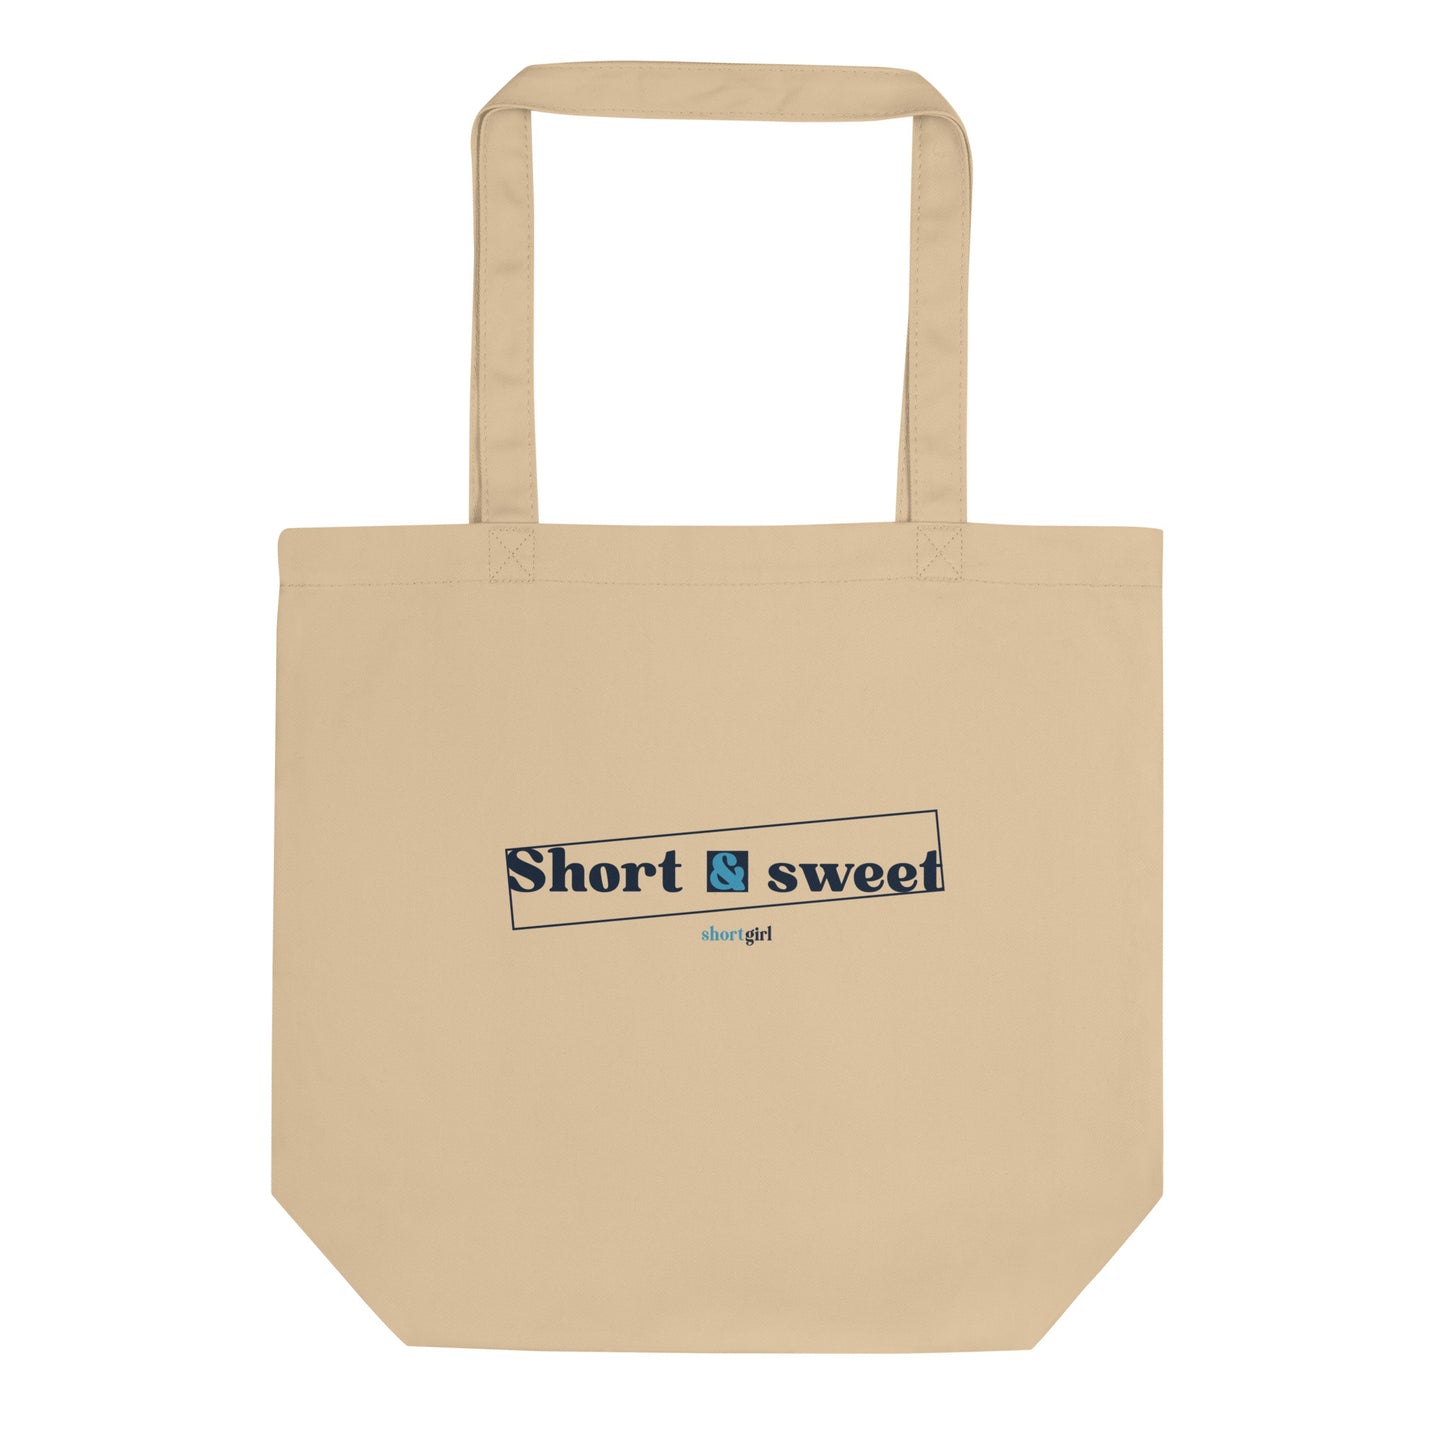 Eco Tote Bag - Short & sweet